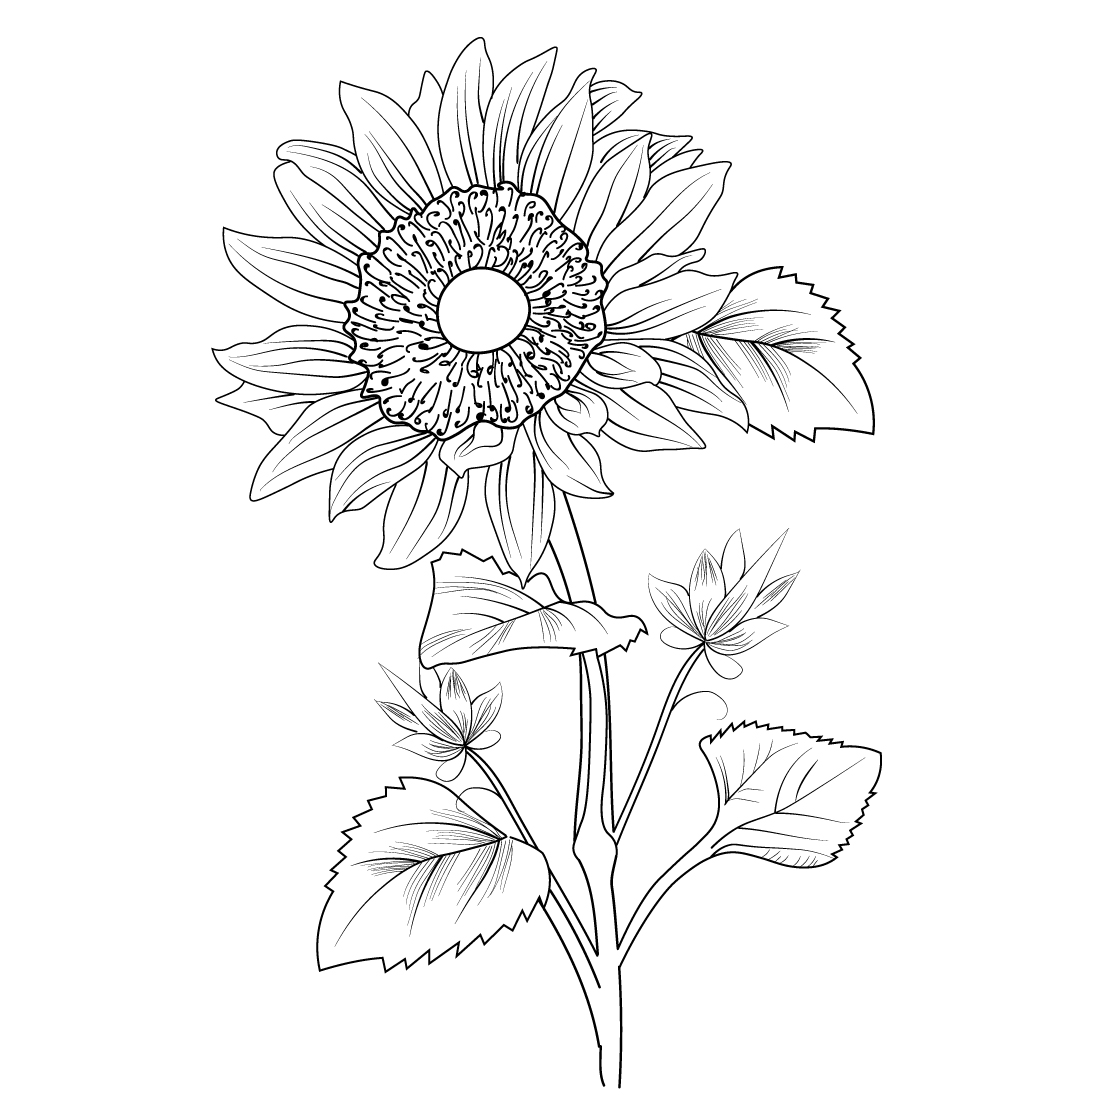 File:Sunflower clip art.svg - Wikipedia